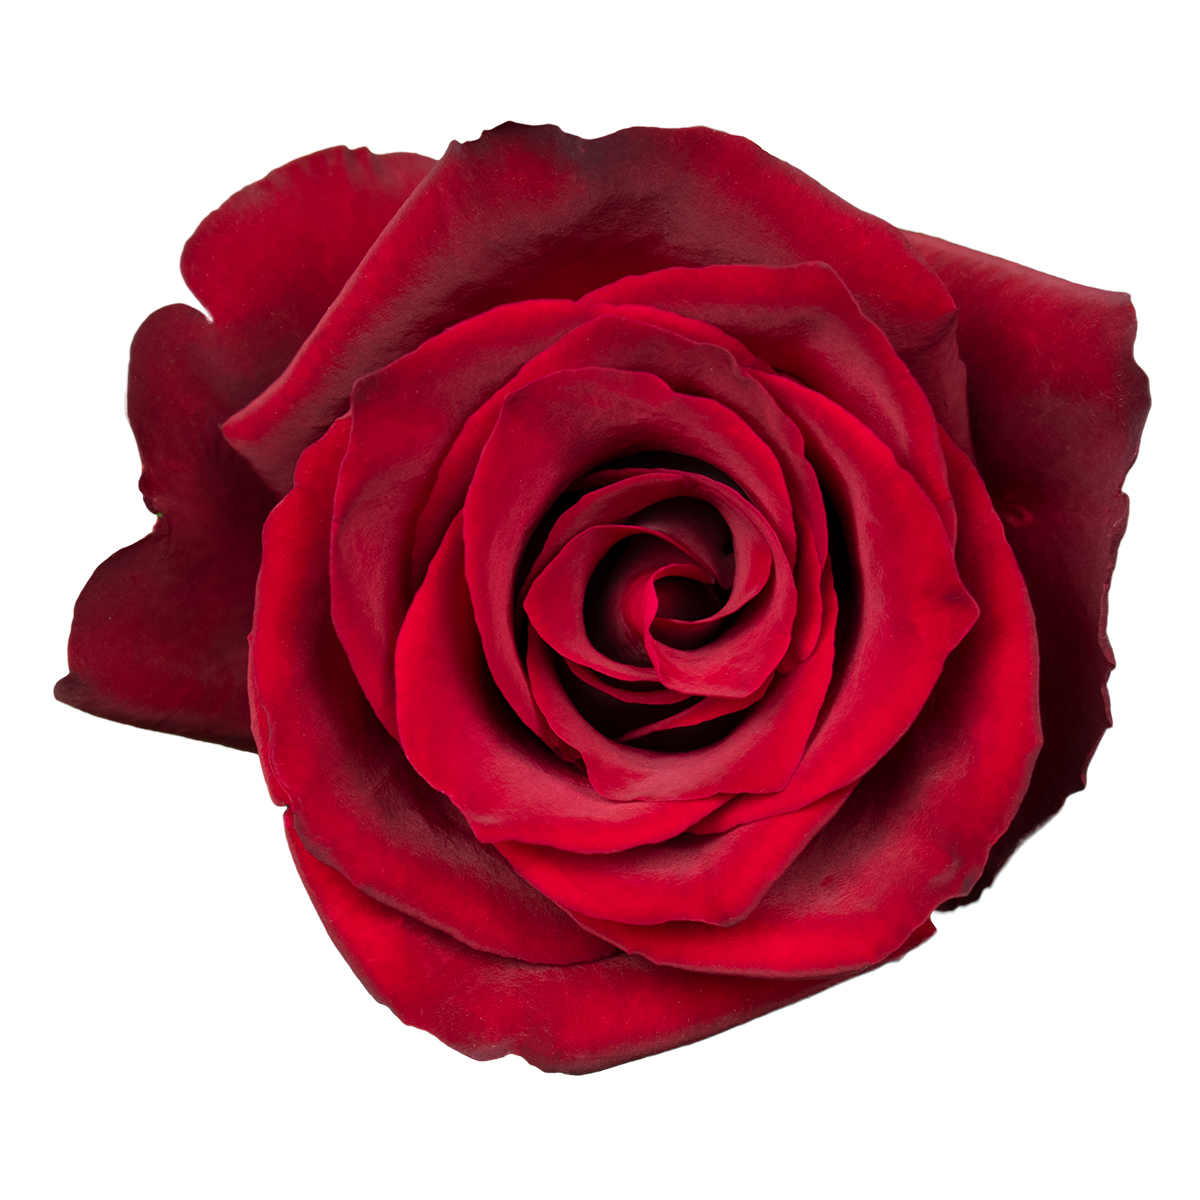 EVER RED rose - Florist Rose Paradise! - Decofresh TOTF2020 on Thursd